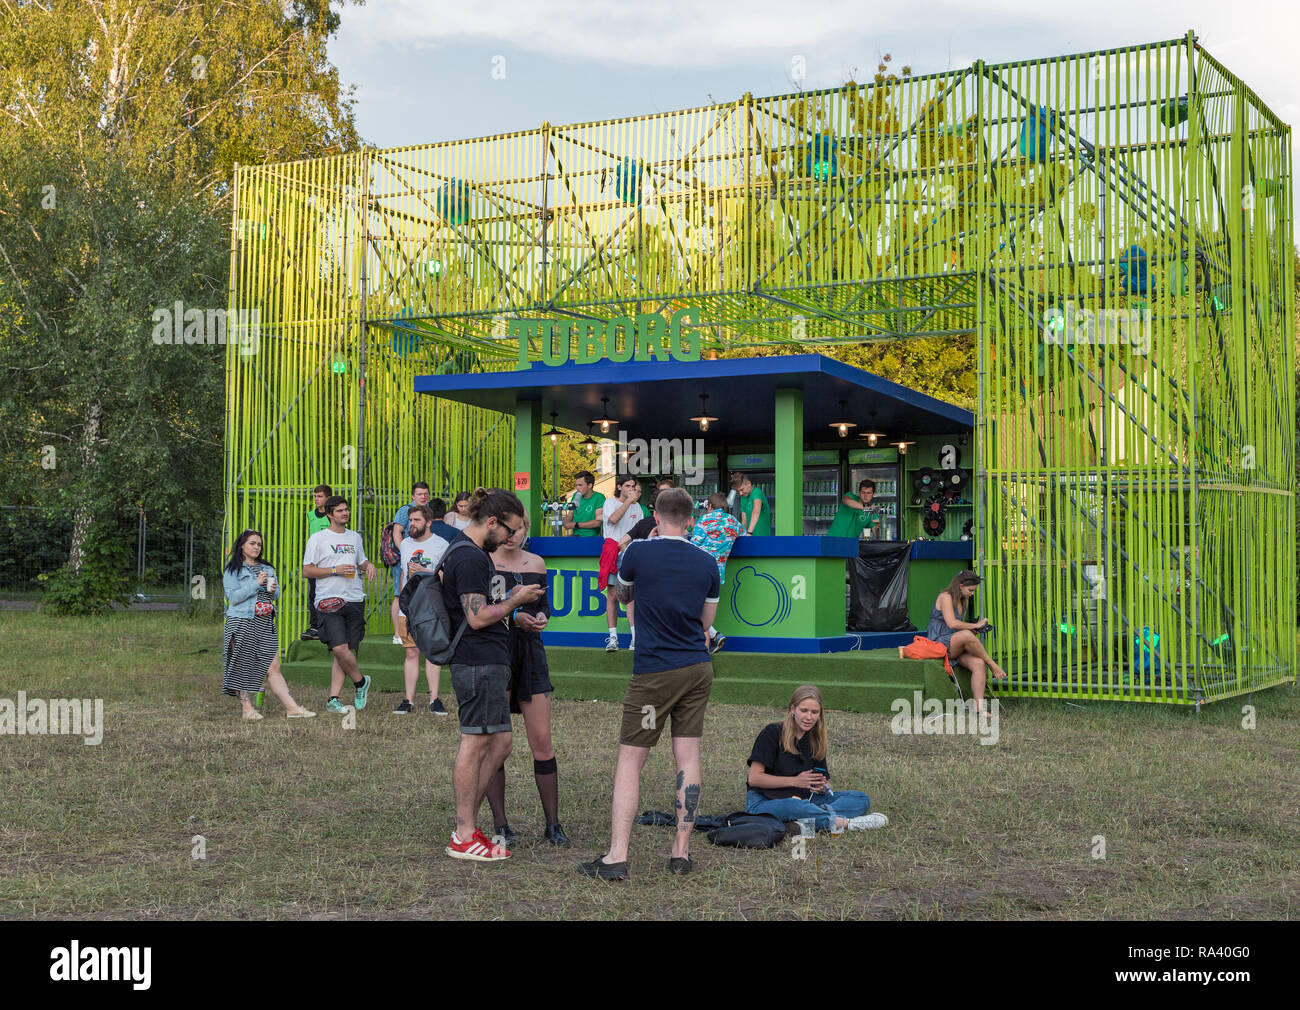 KIEV, UKRAINE - JULY 06, 2018: People enjoy live concert and visit outdoor Tuborg beer bar at the Atlas Weekend Festival in National Expocenter. Stock Photo